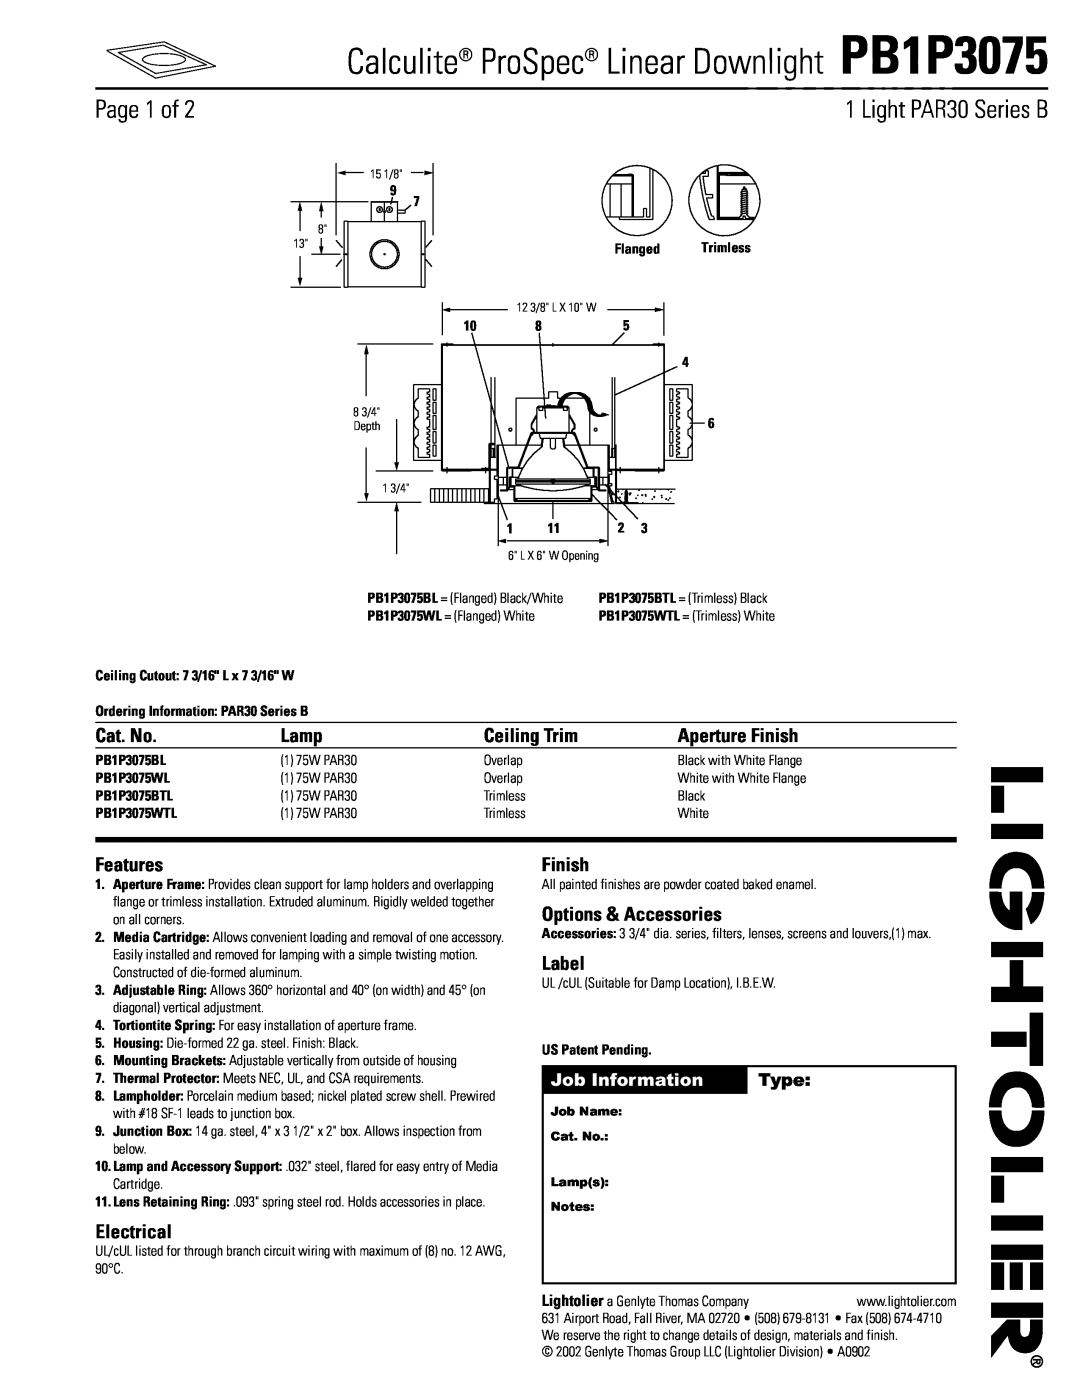 Lightolier manual Calculite ProSpec Linear Downlight PB1P3075, Light PAR3003/02 Series B, Page 1 of, Cat. No, Lamp 